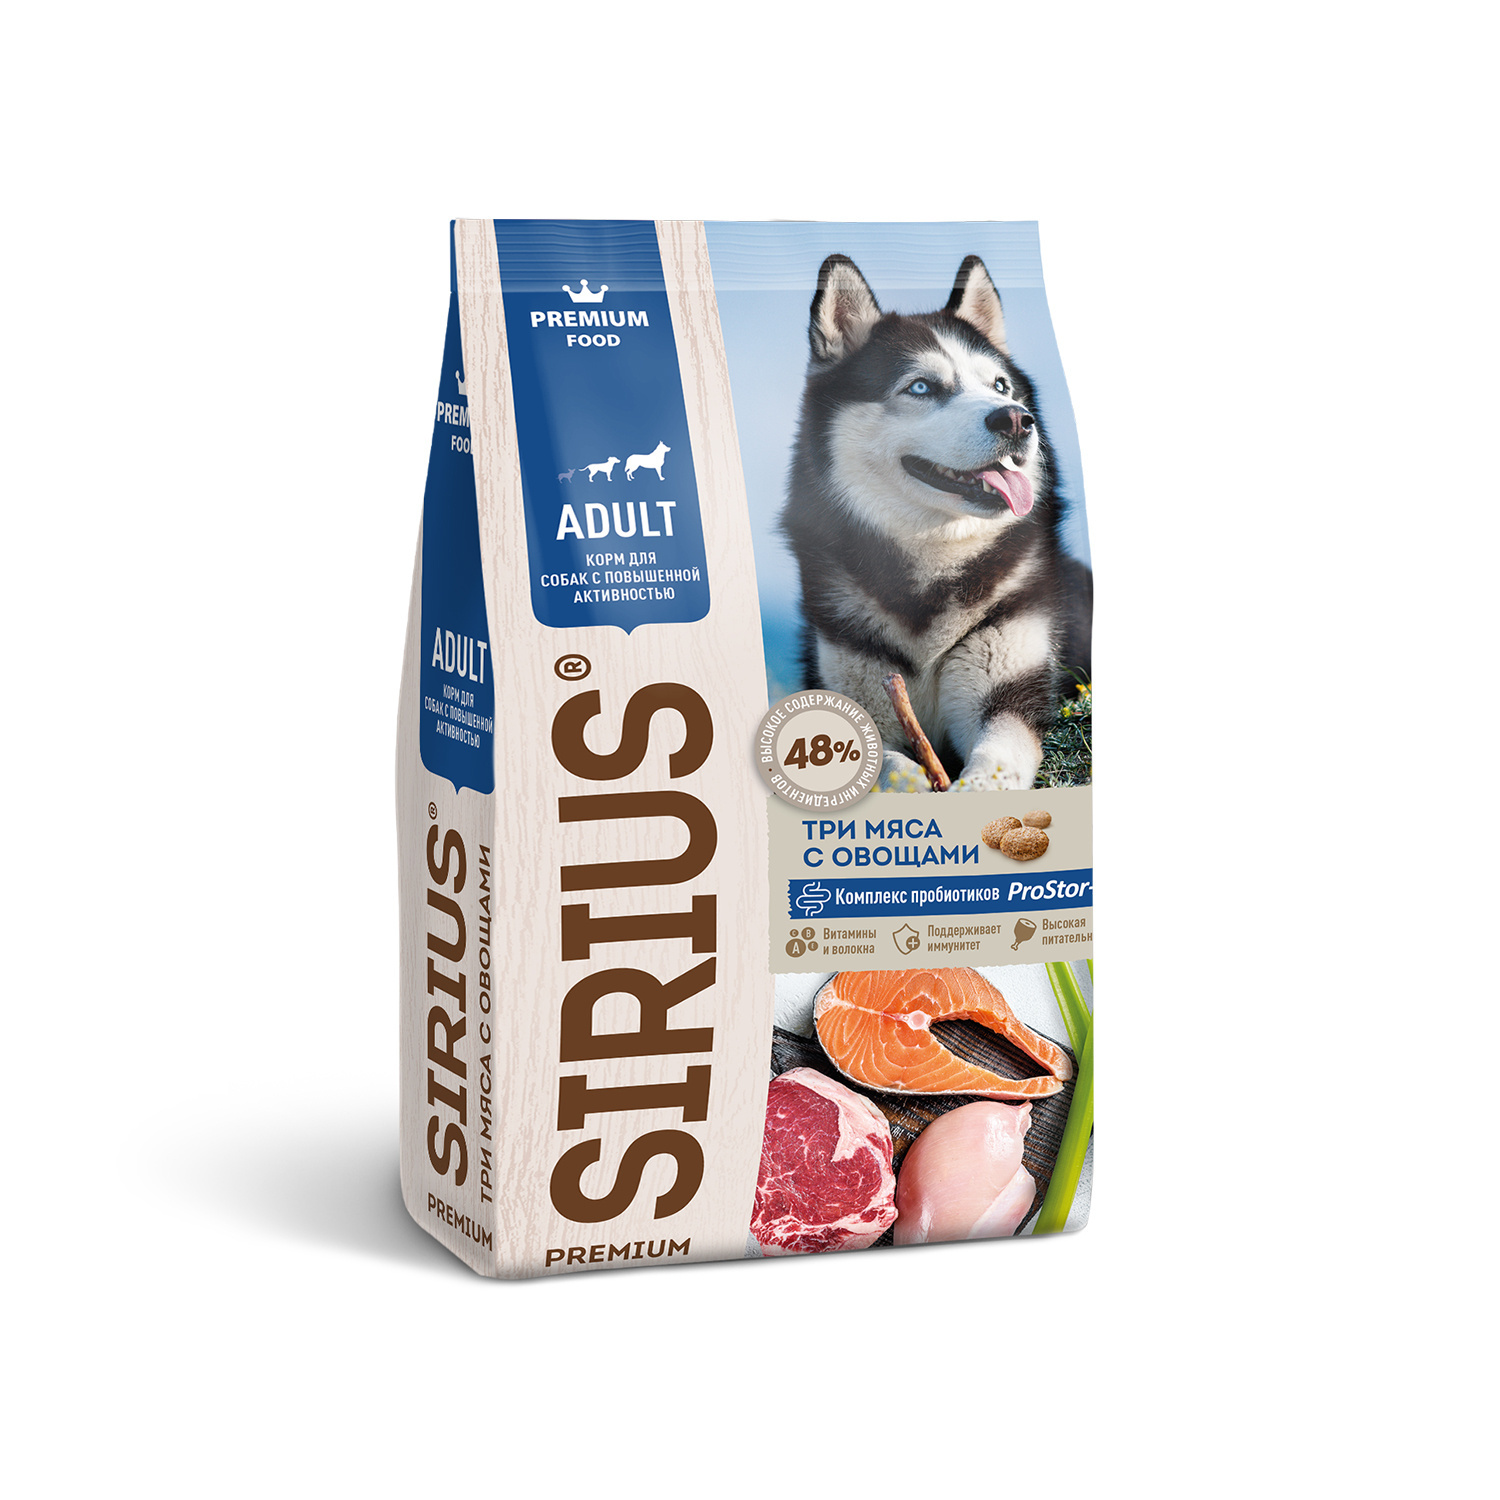 Sirius Sirius сухой корм для собак с повышенной активностью, три мяса с овощами (2 кг) корм сухой sirius сух д собак с повышенной активностью три мяса с овощами 15кг